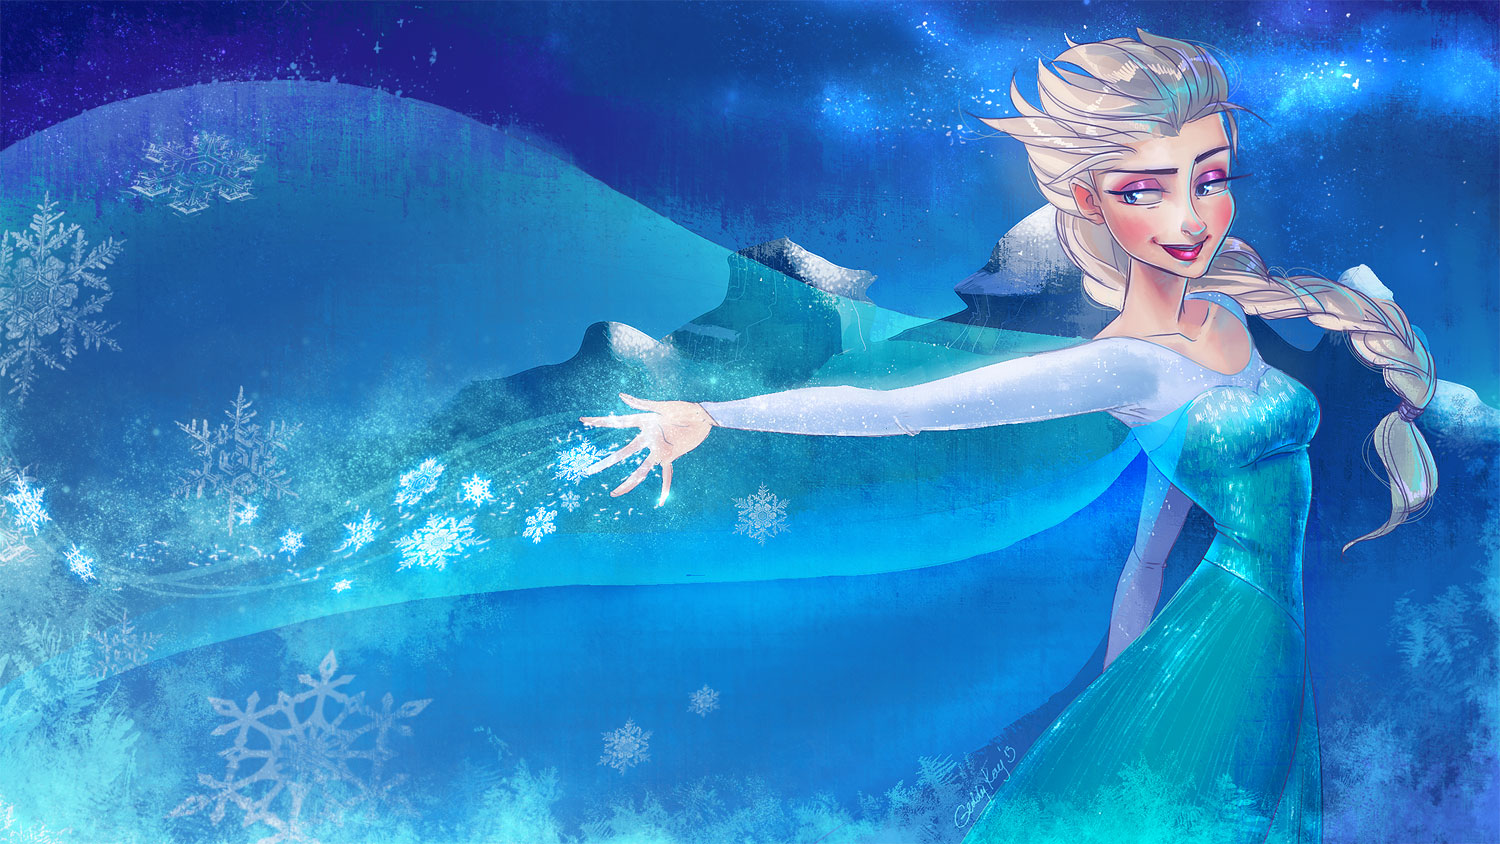 Frozen Elsa And Anna Wallpaper Digital Fan Art 4 picture